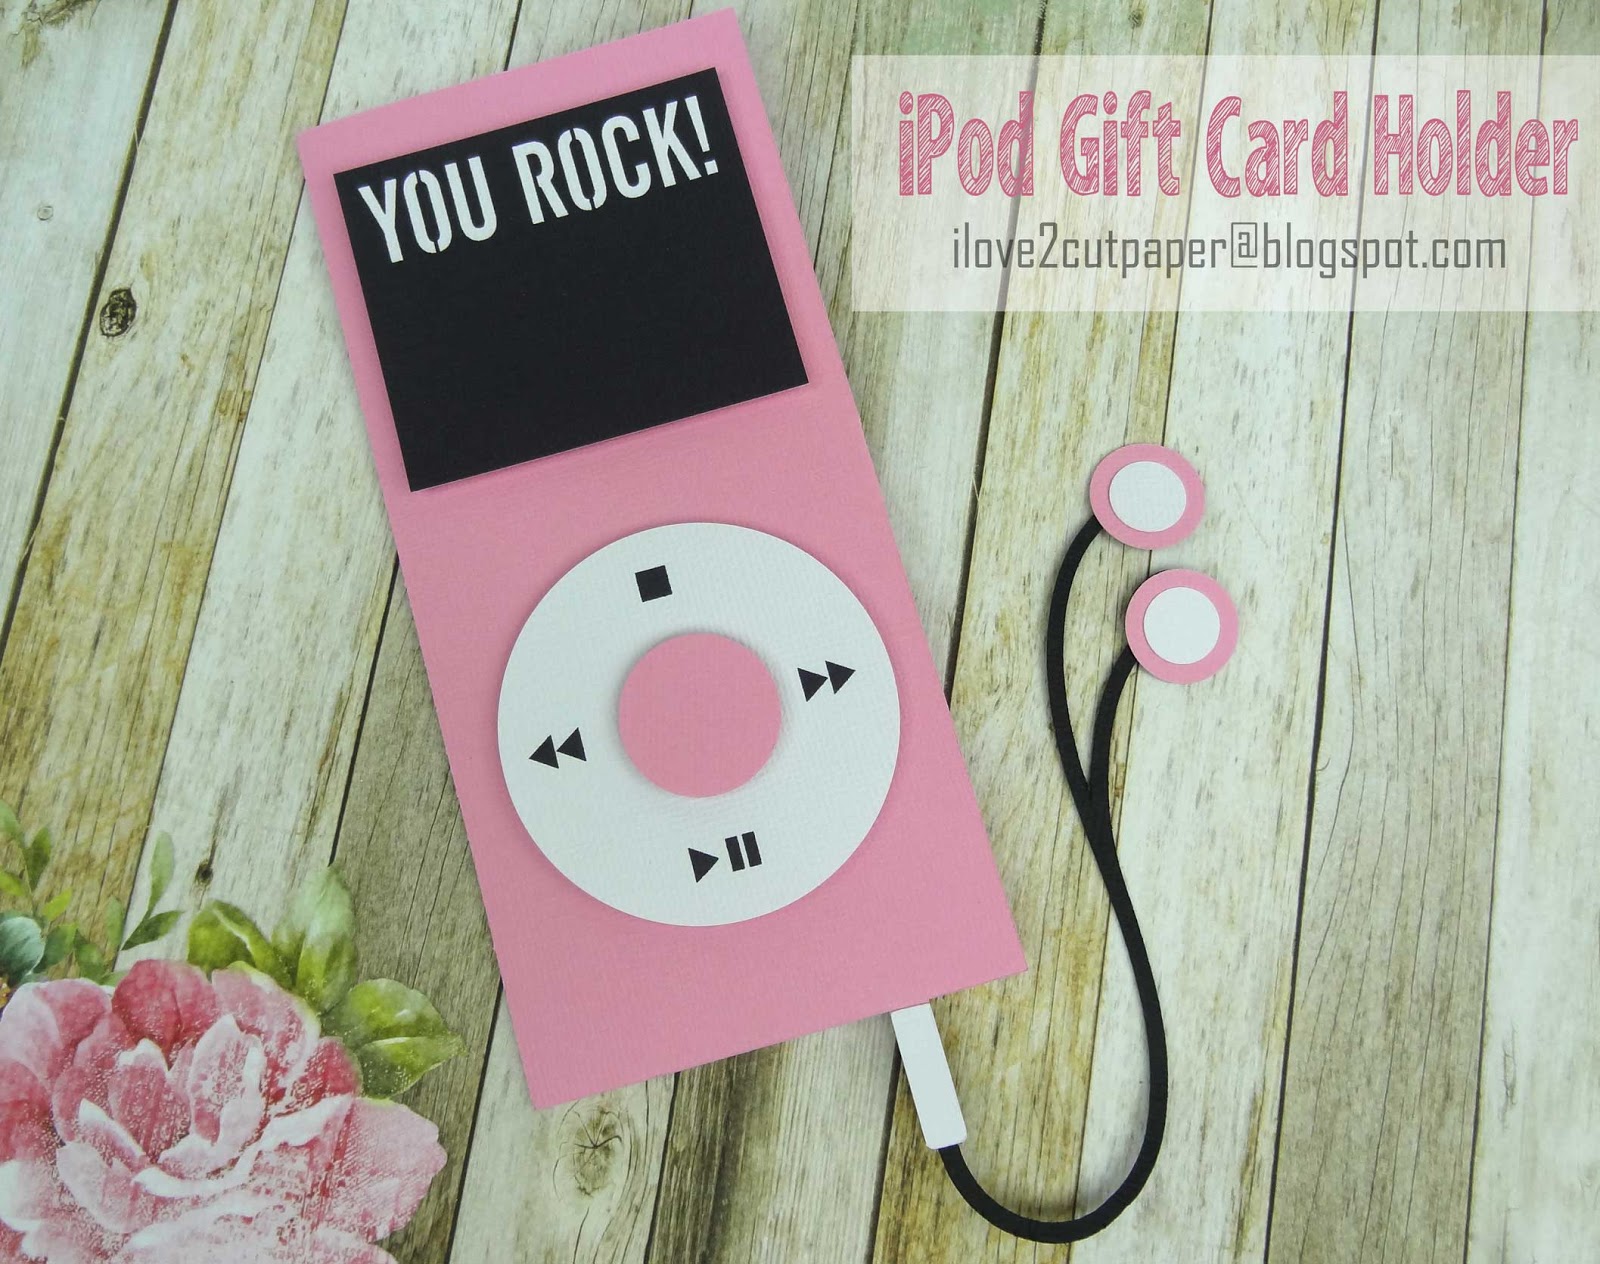 Download i love 2 cut paper: iPod Gift Card Holder